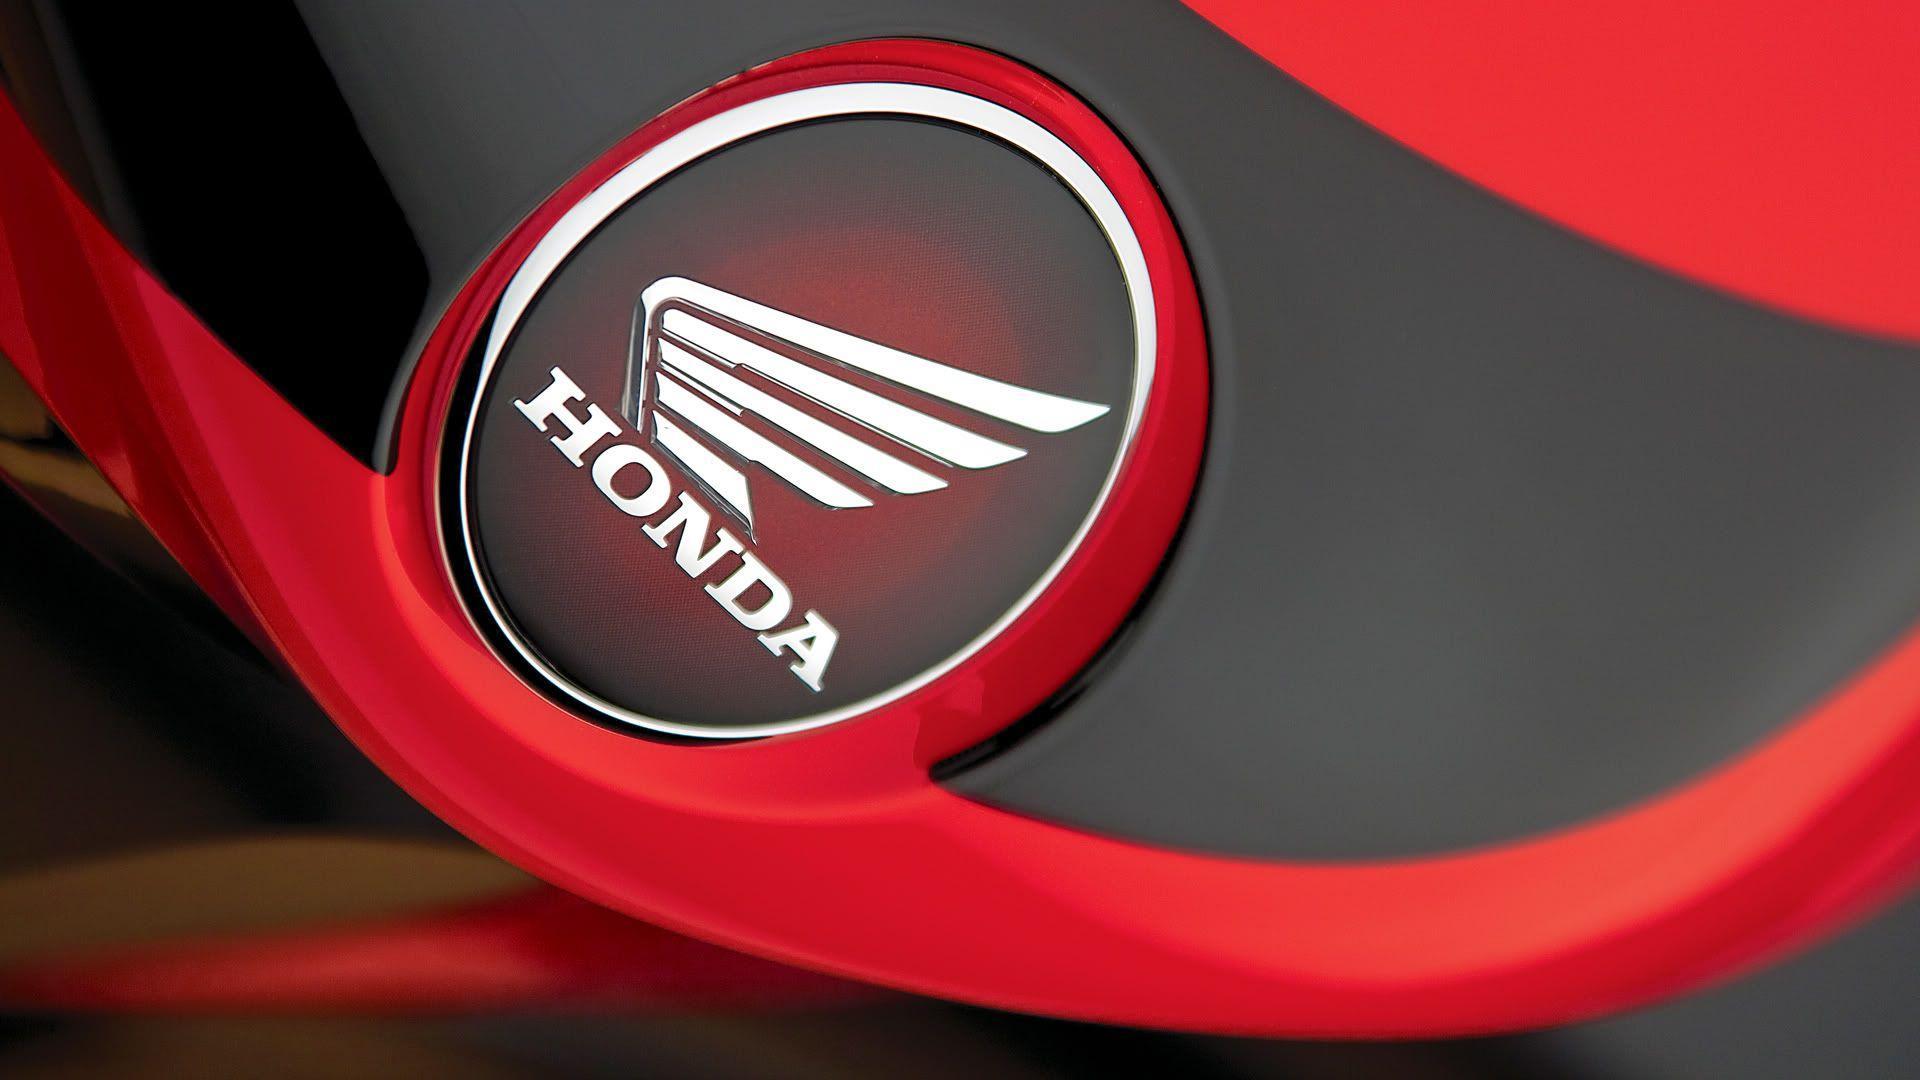 HD Honda Background & Honda Wallpaper Image For Download